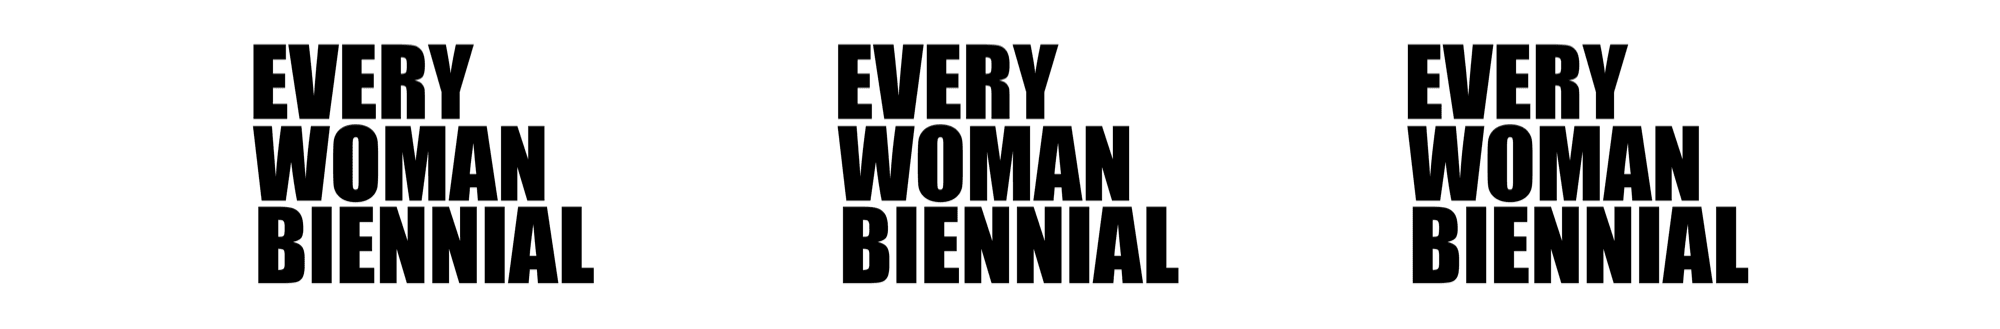 Every Woman Biennial